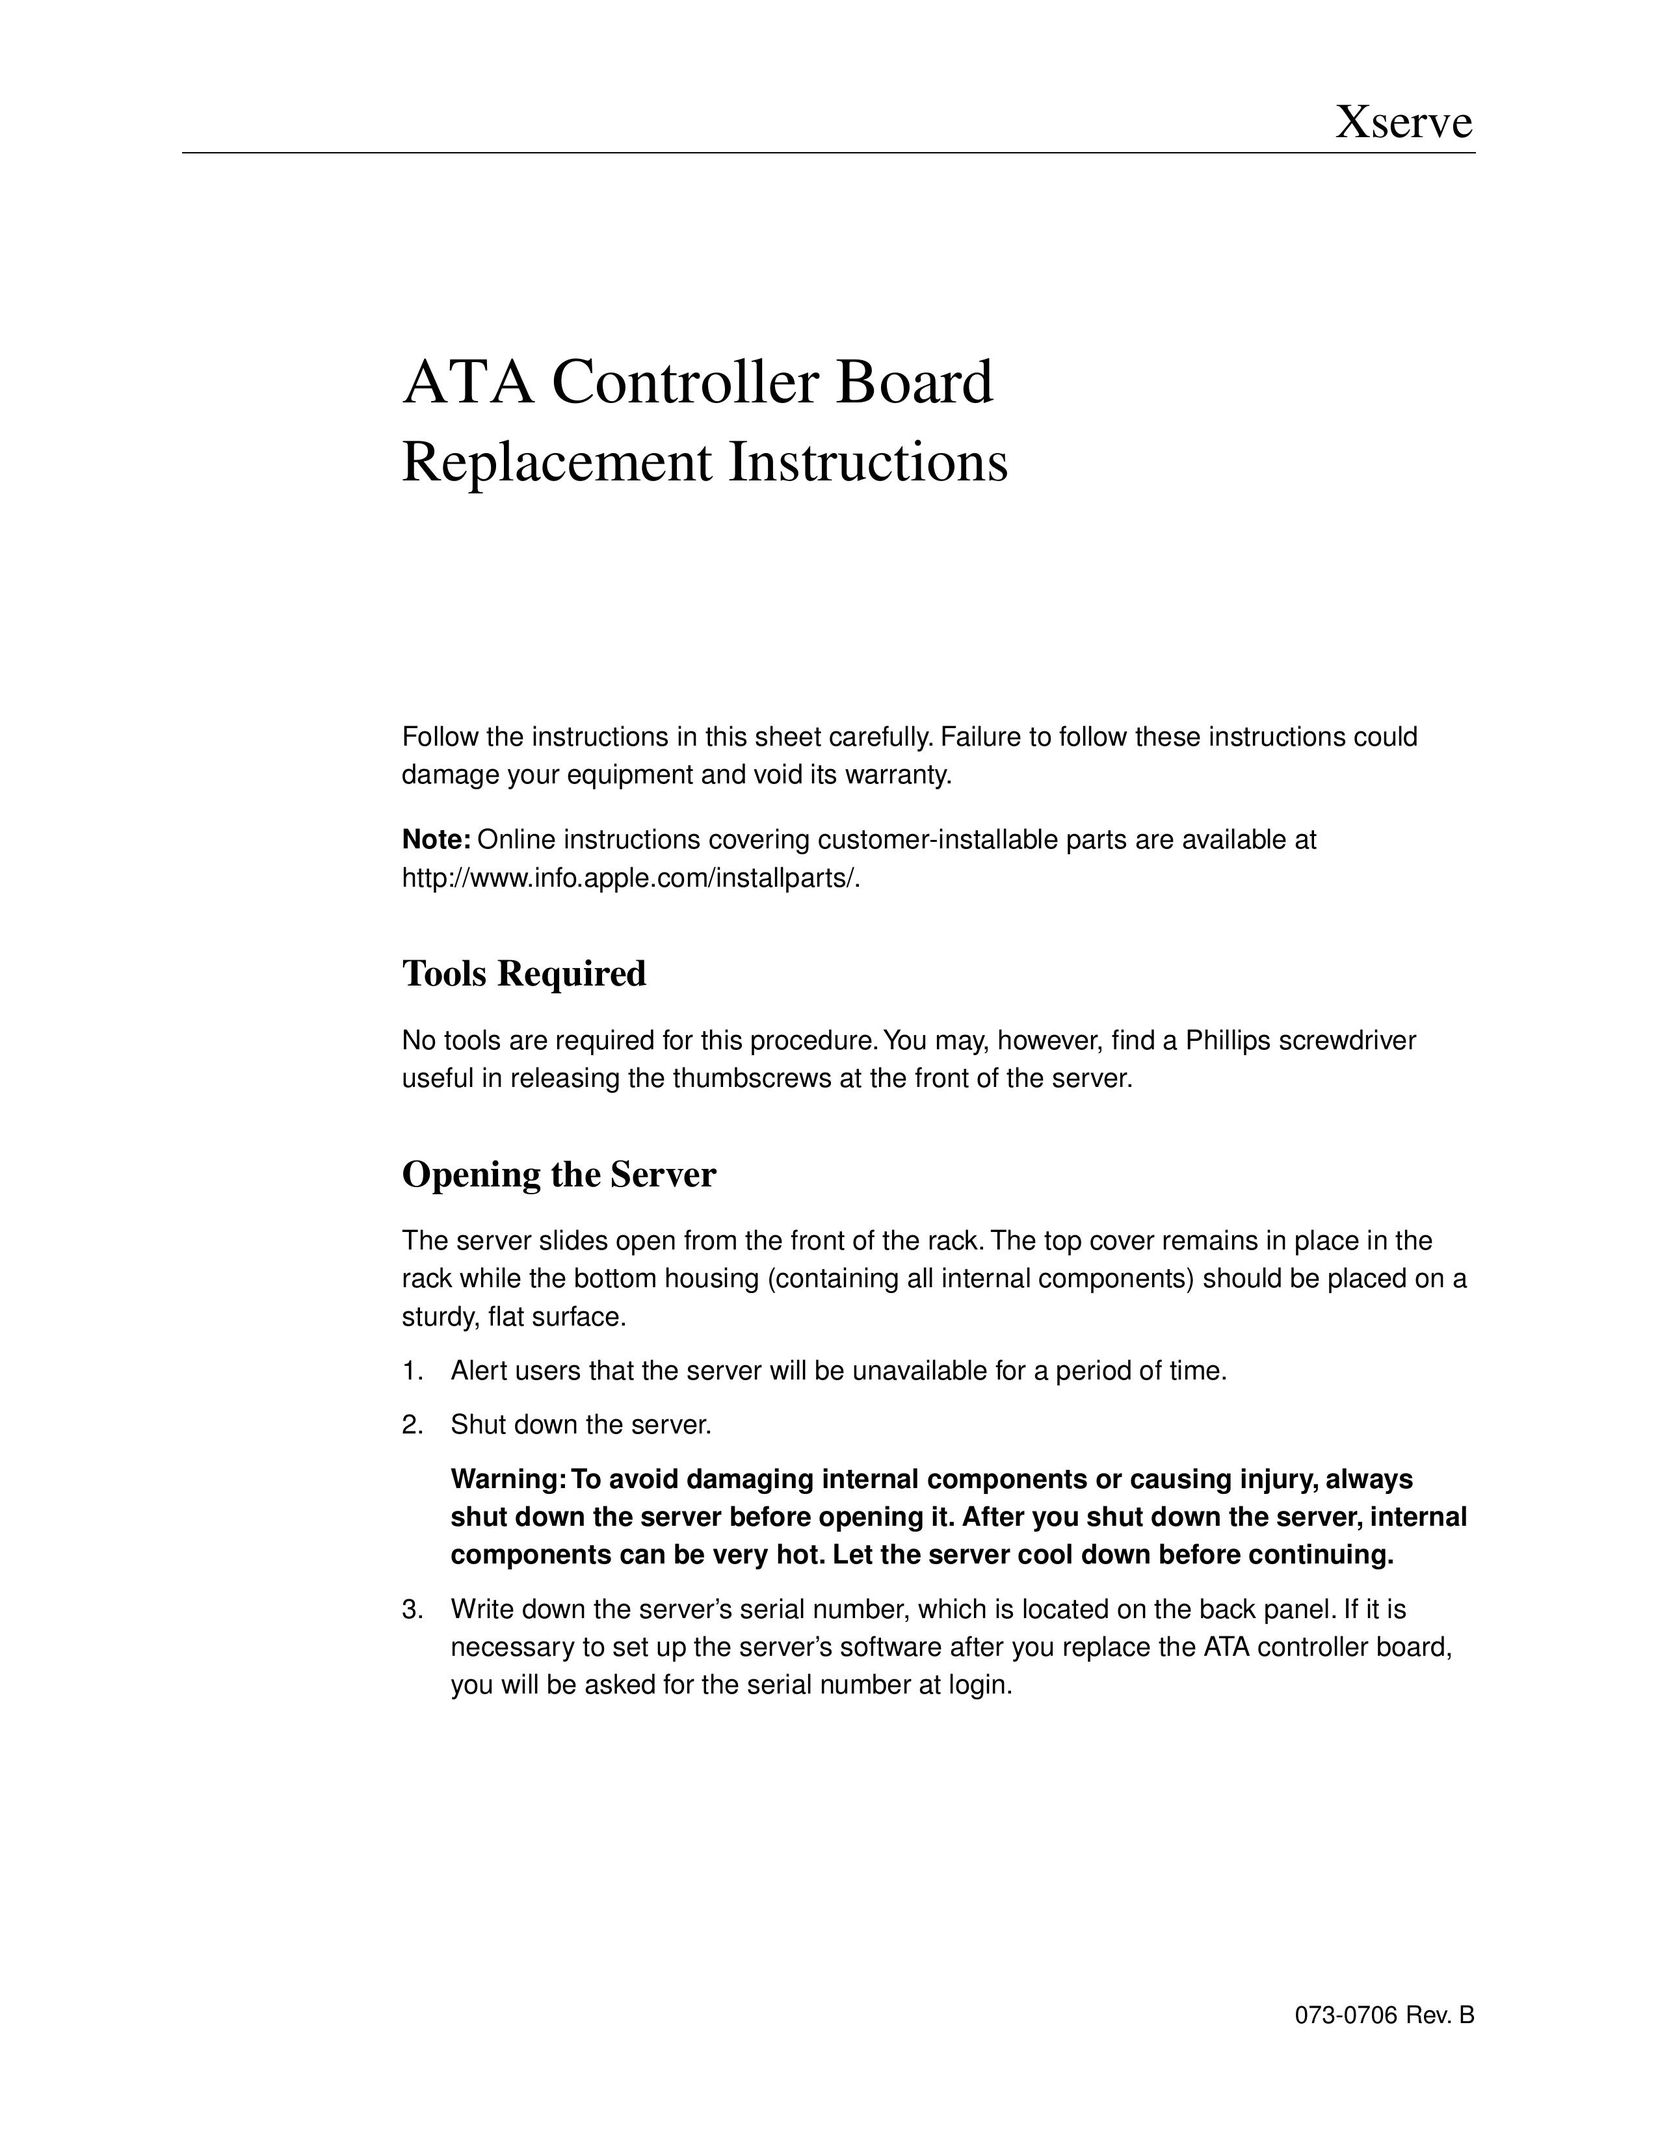 Apple ATA Controller Board Computer Hardware User Manual